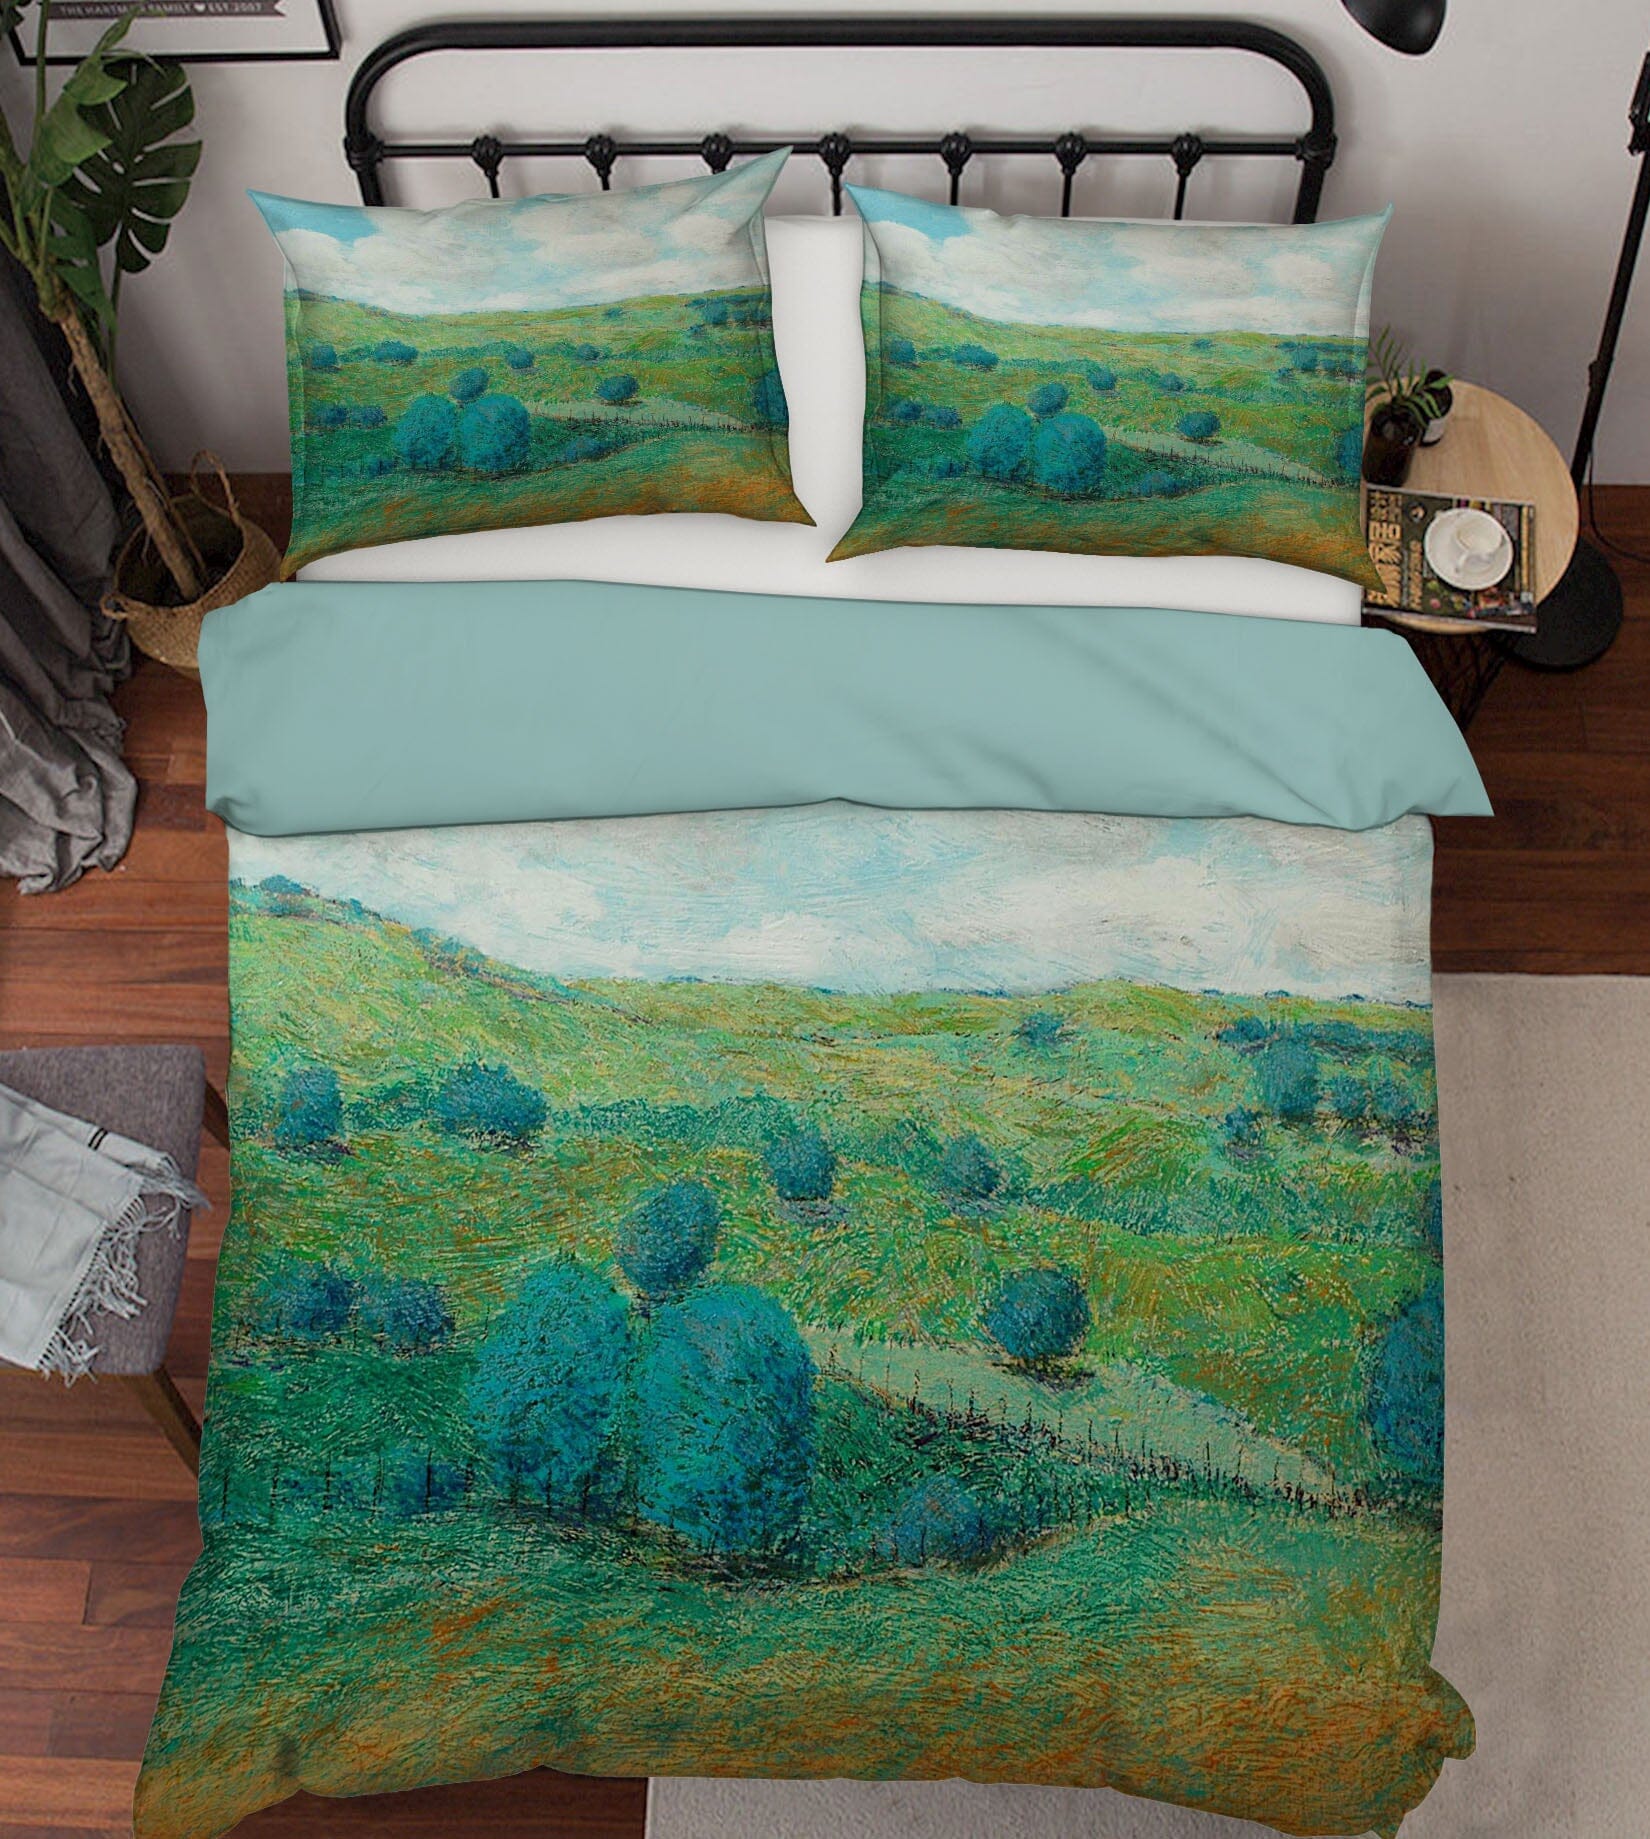 3D Dry Hills 2111 Allan P. Friedlander Bedding Bed Pillowcases Quilt Quiet Covers AJ Creativity Home 